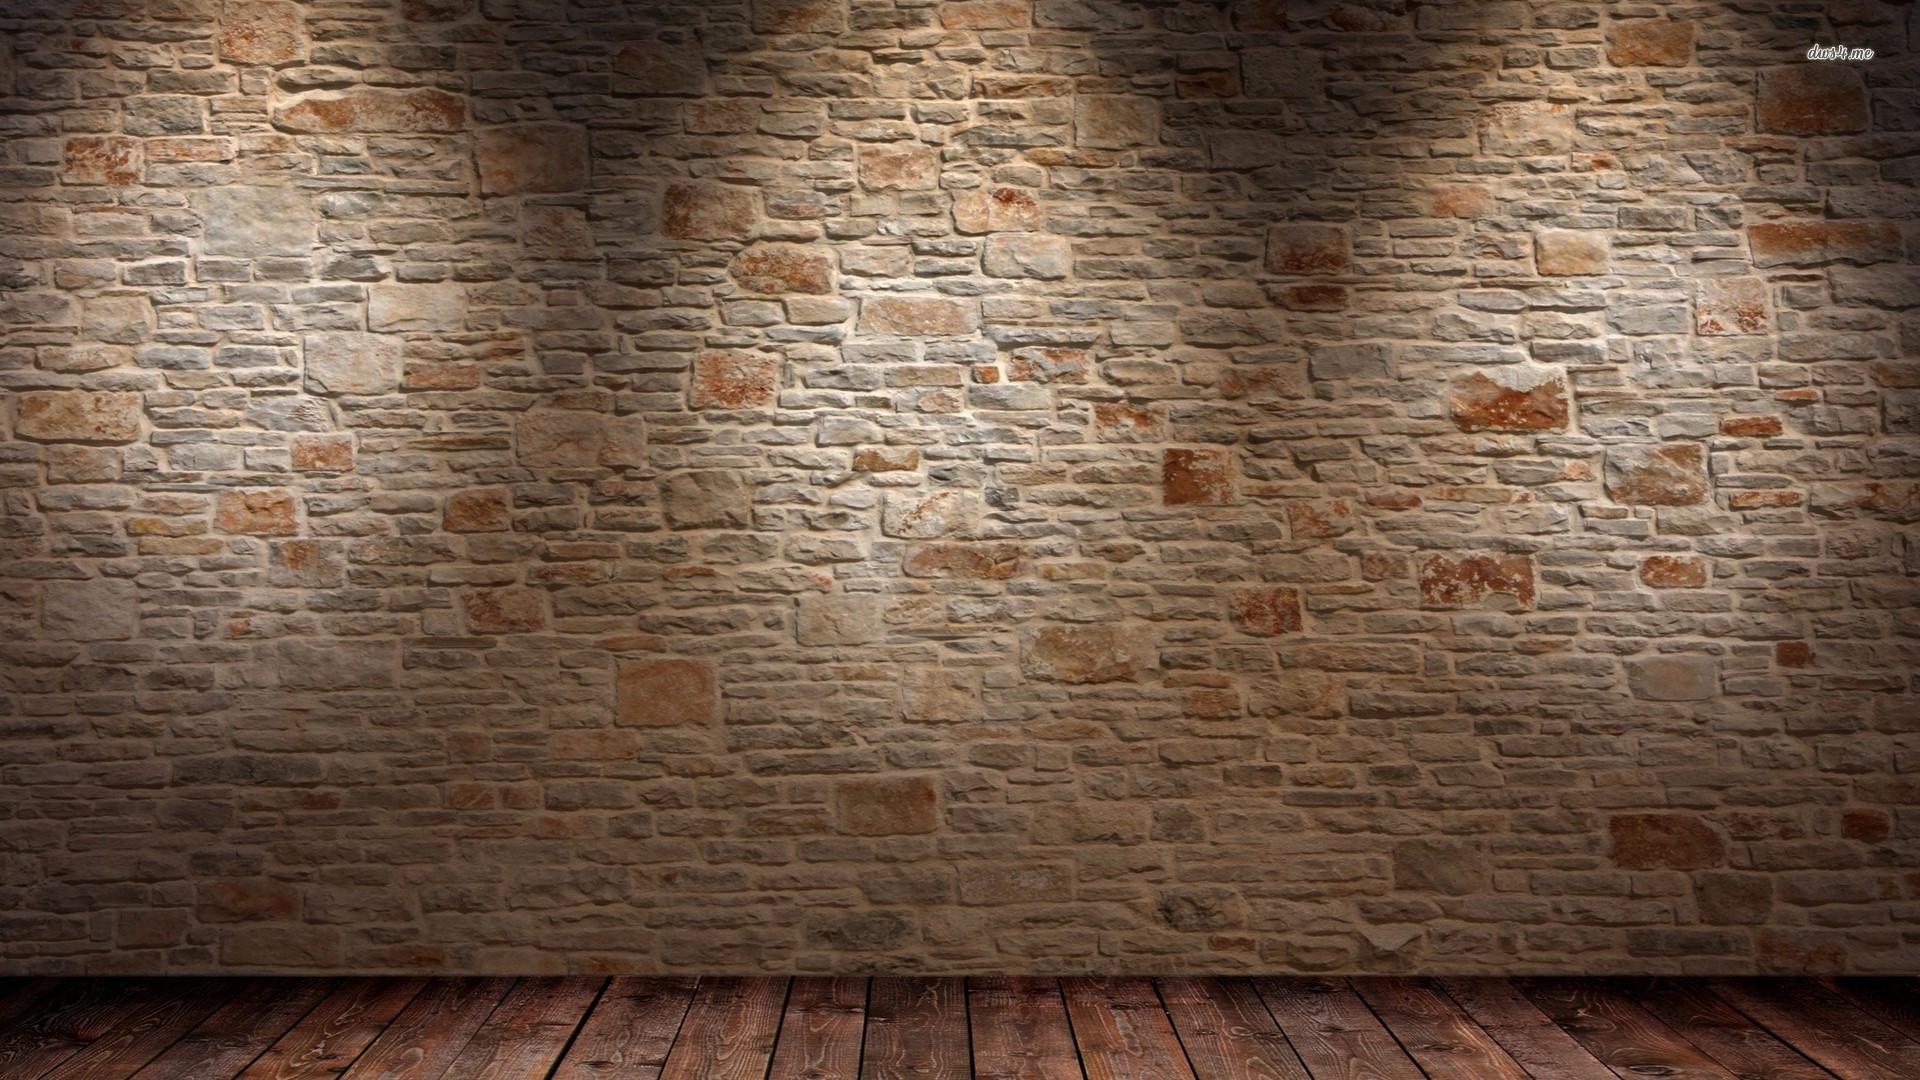 Brick Walls and Wood Floor